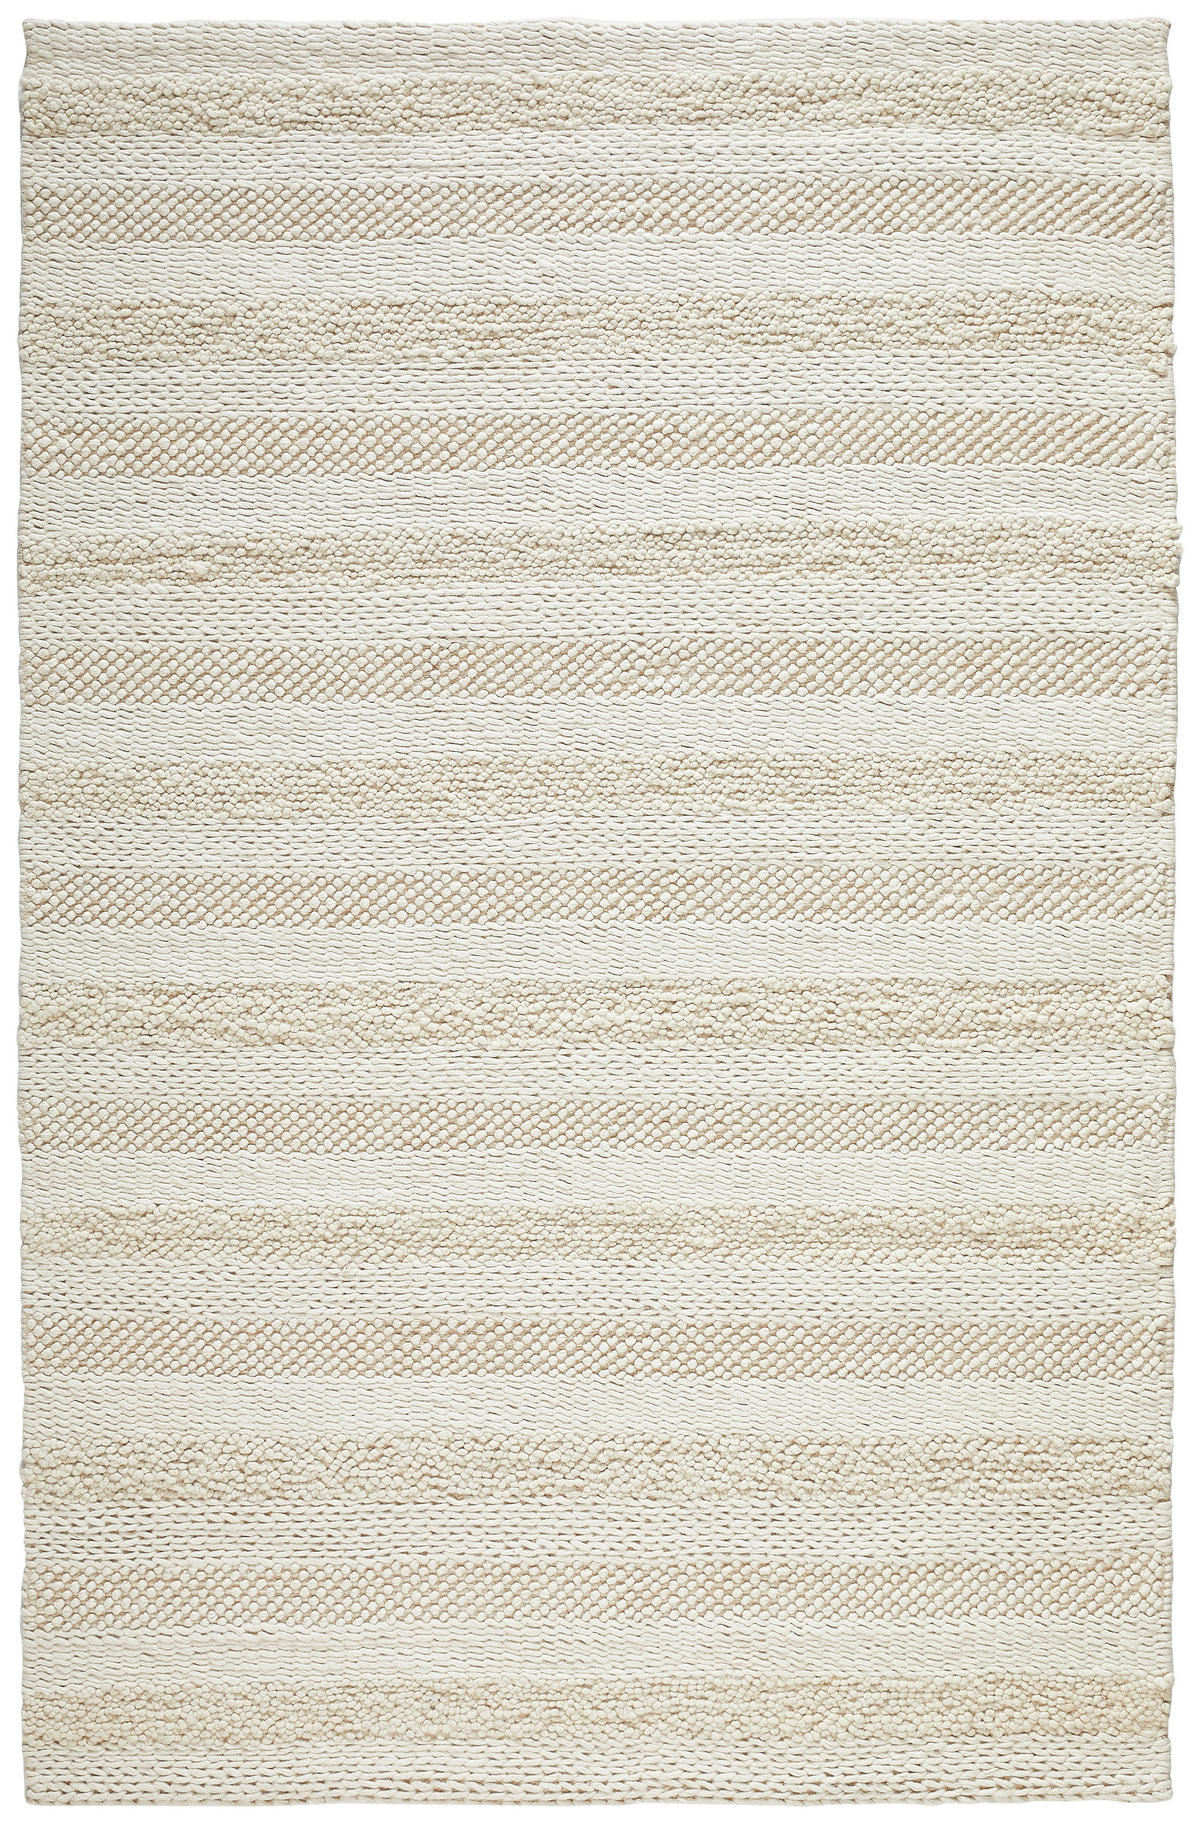 HANDWEBTEPPICH 130/190 cm Nordic Stripes  - Creme, Natur, Textil (130/190cm) - Linea Natura